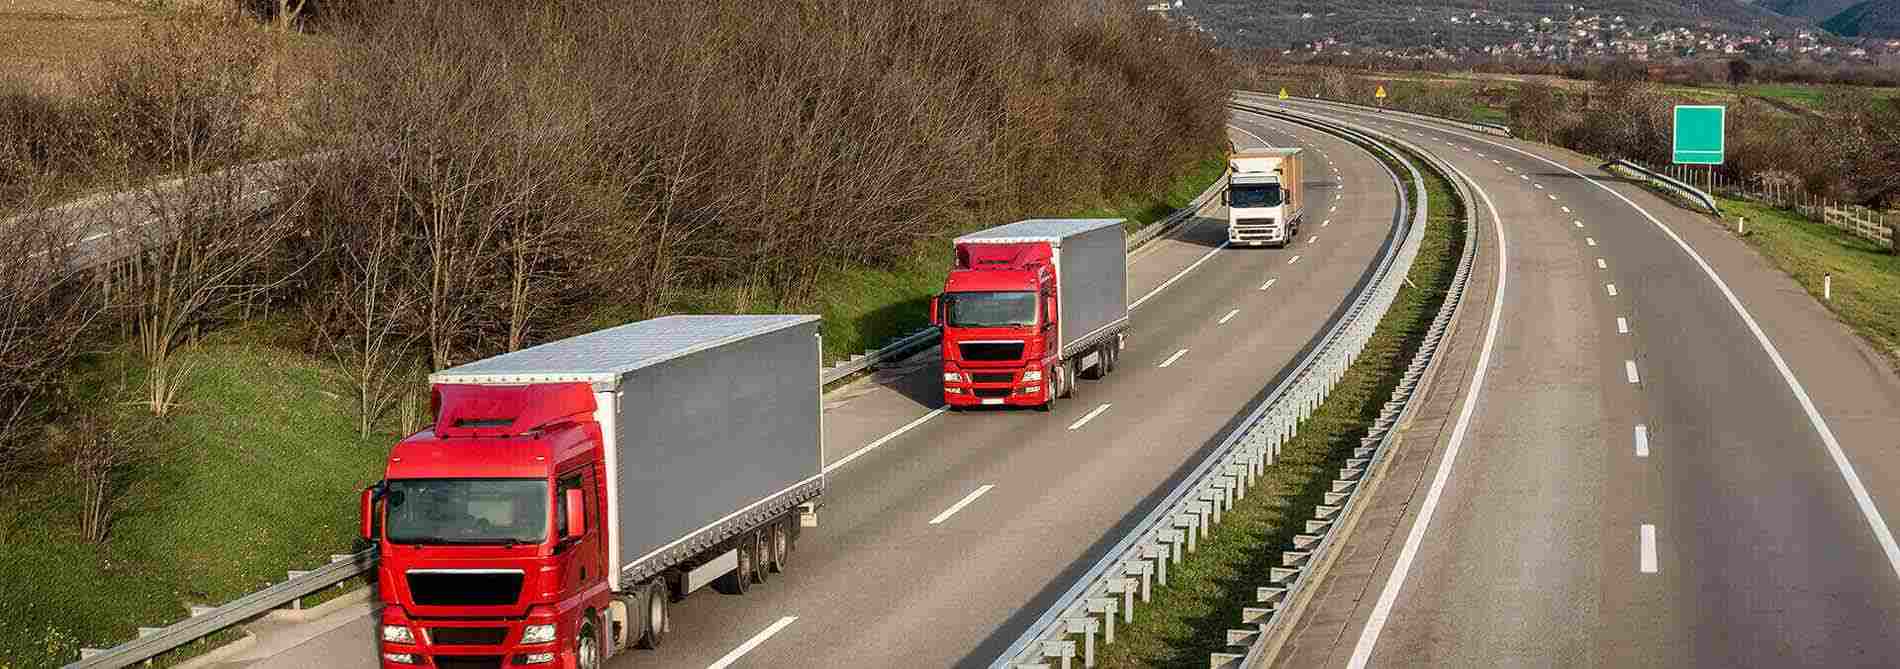 Trucks in a highway